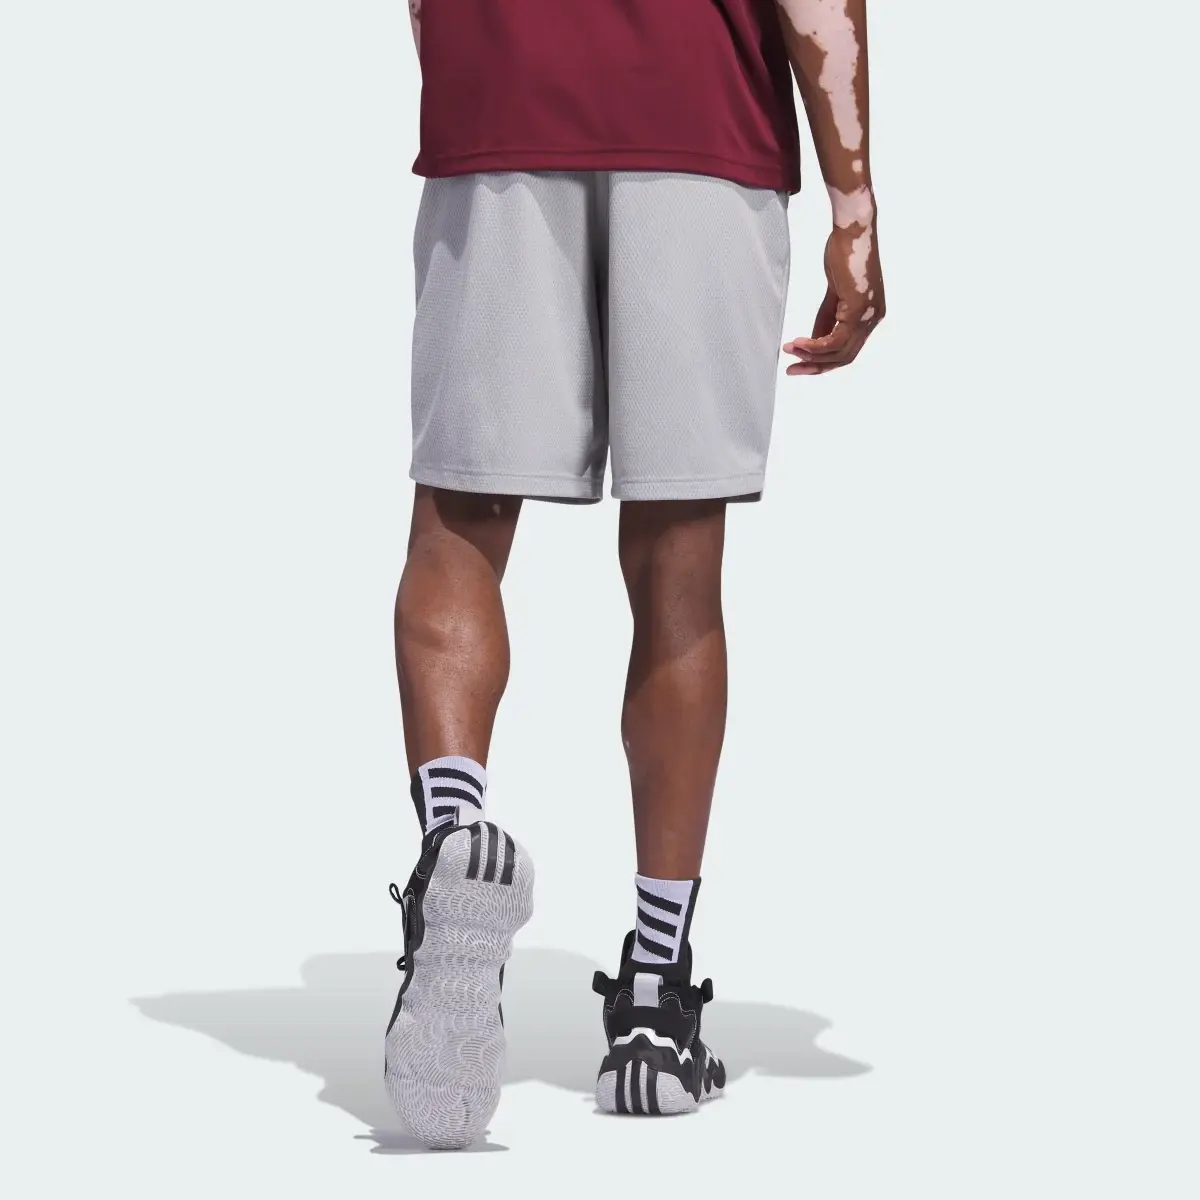 Adidas Legends Shorts. 2